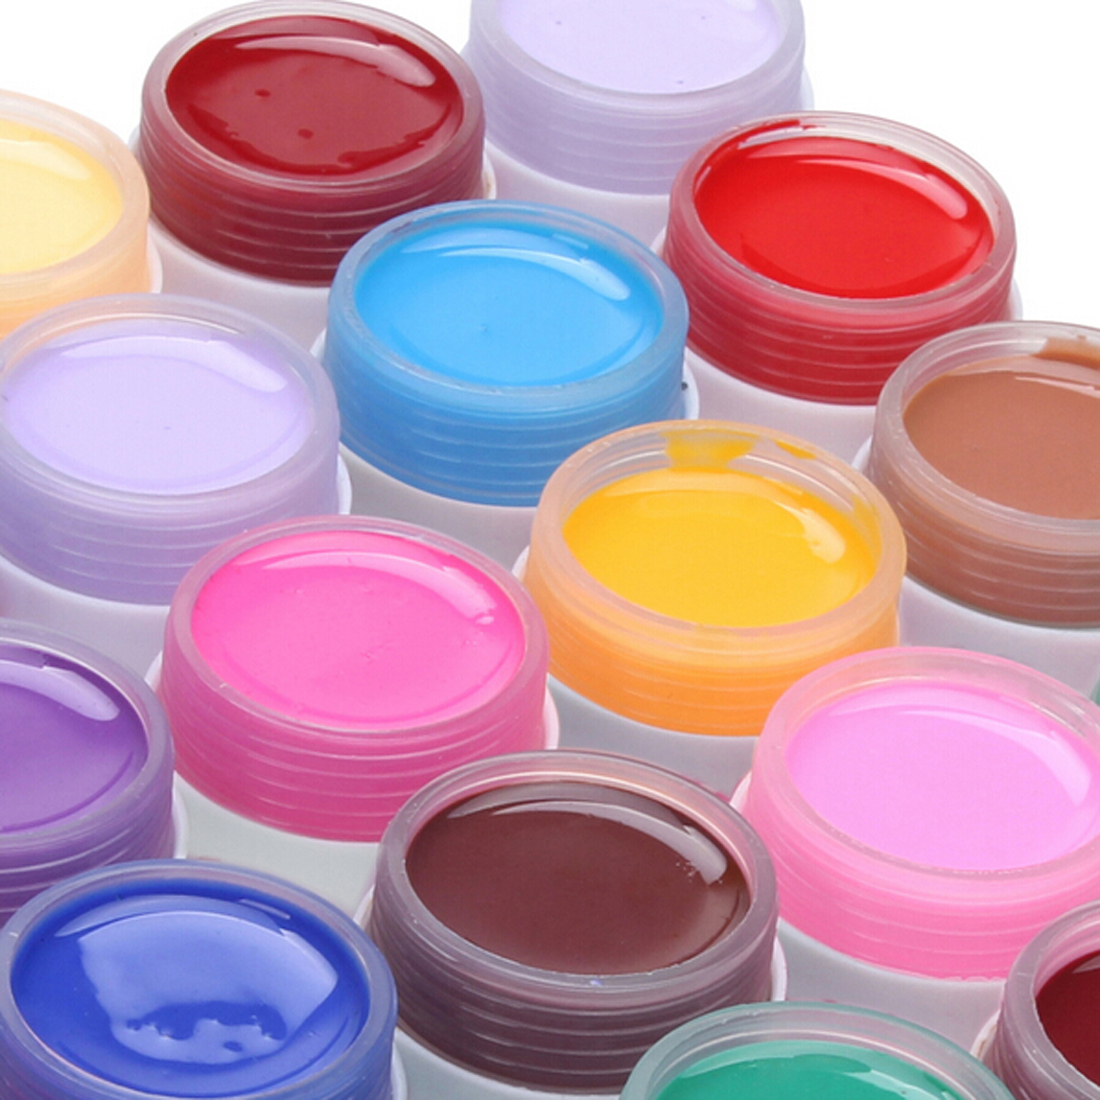 New Arrival For Nail Art Tips Manicure UV Nail Polish Gel 36 Pot Pure Color Decor